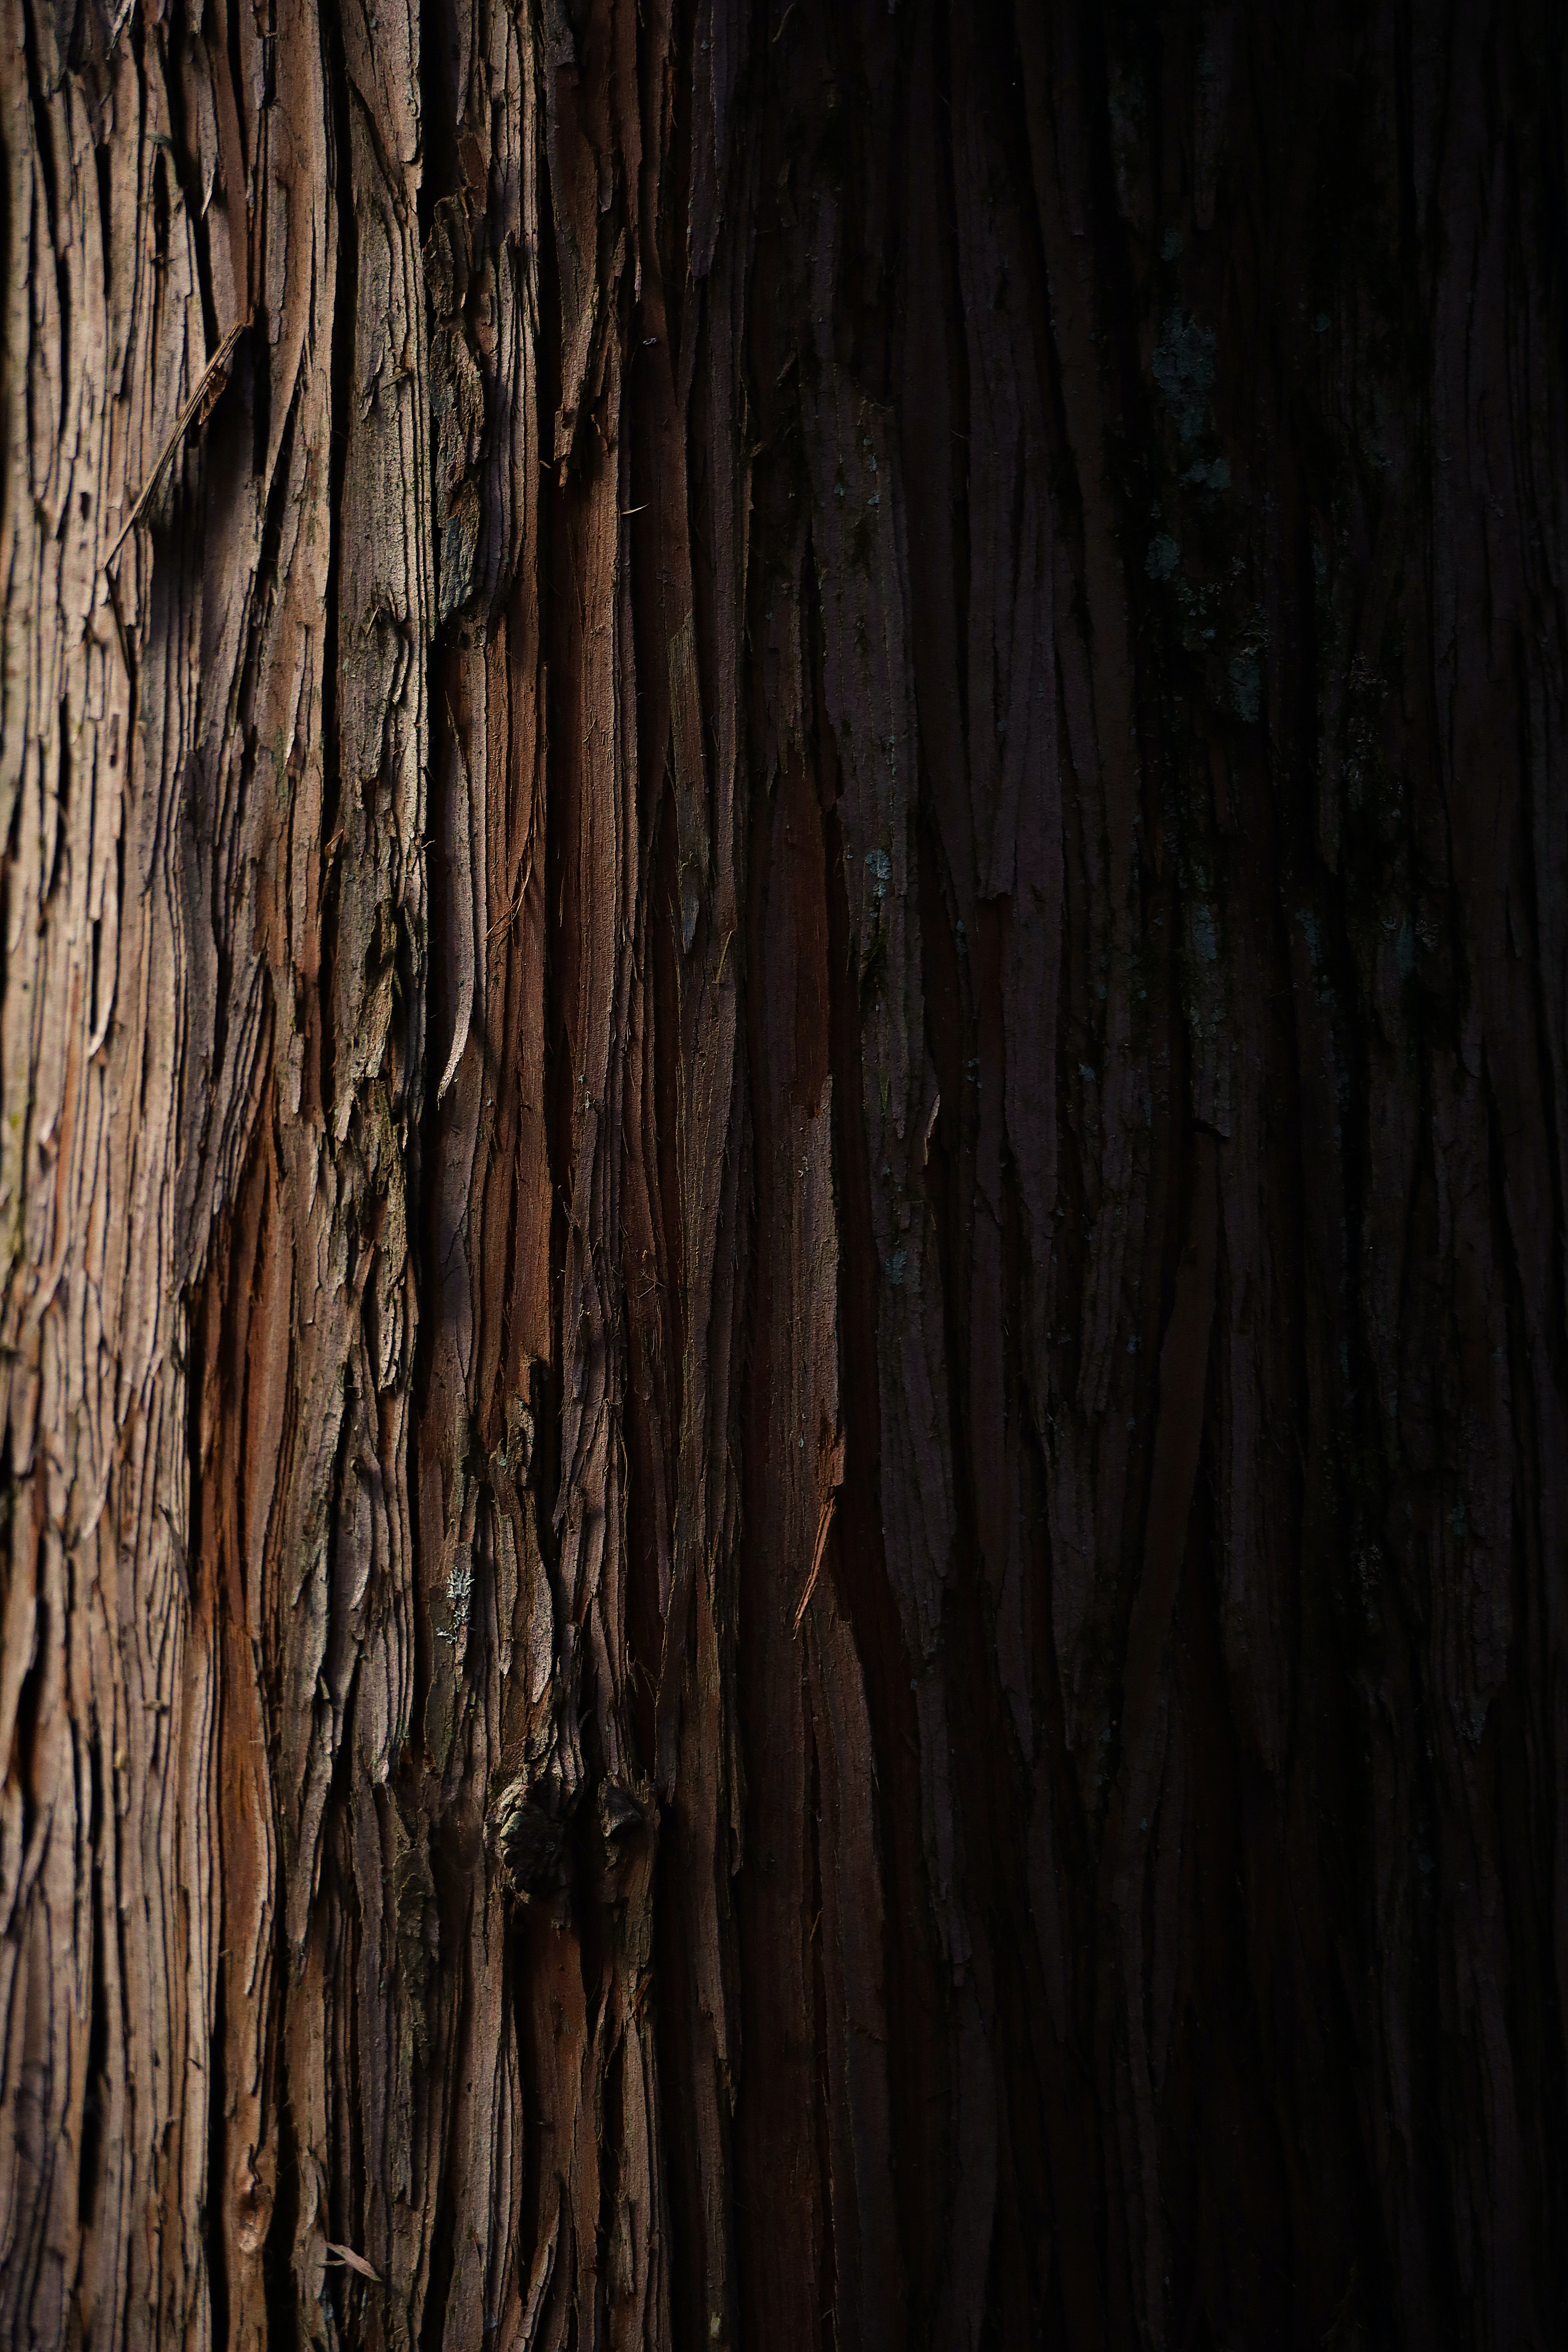 textures, bark, texture, wood, wooden, stripes, streaks, tree iphone wallpaper